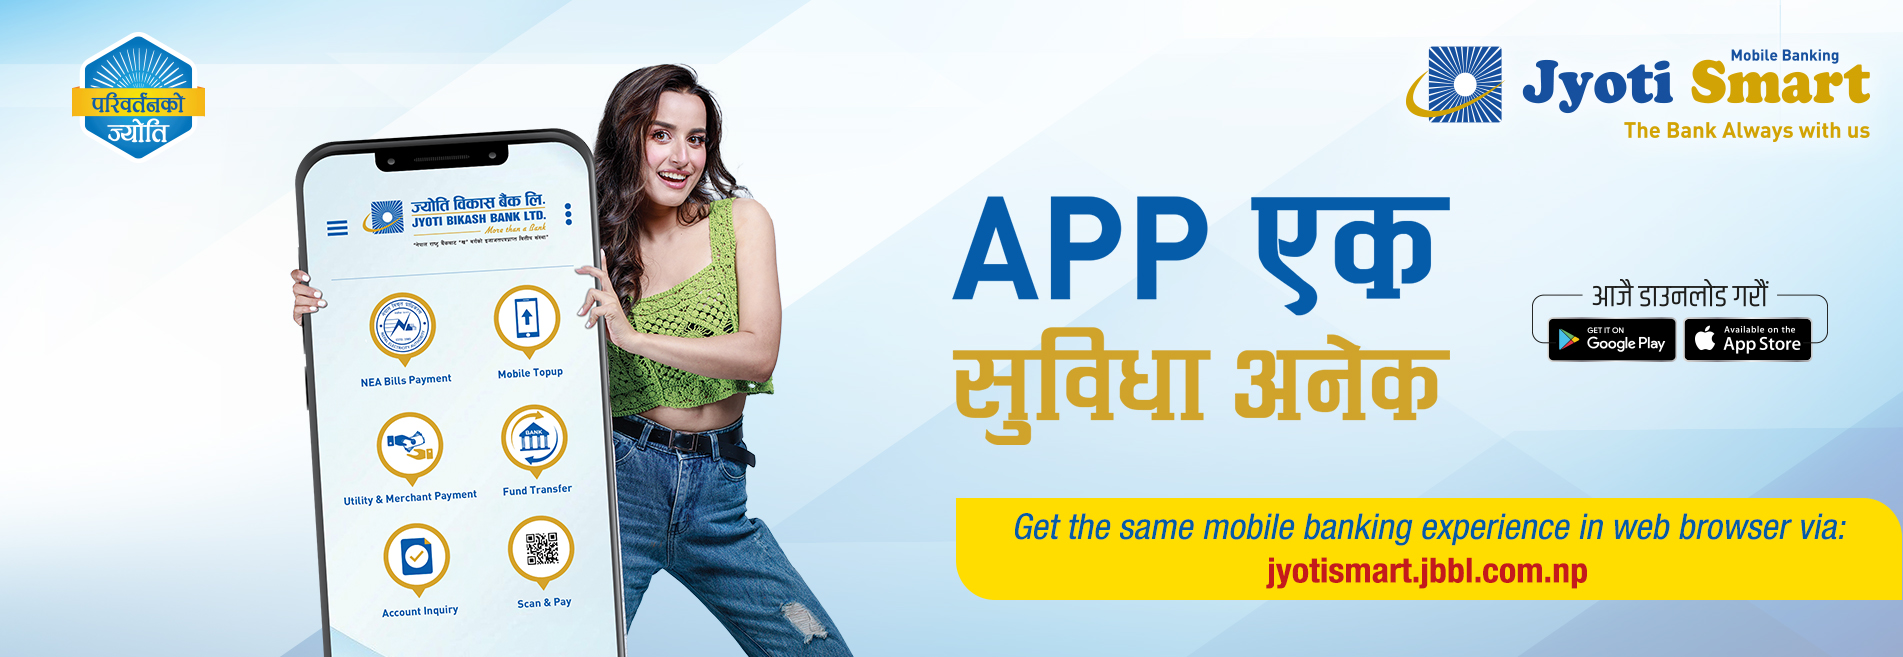 Jyoti Smart App